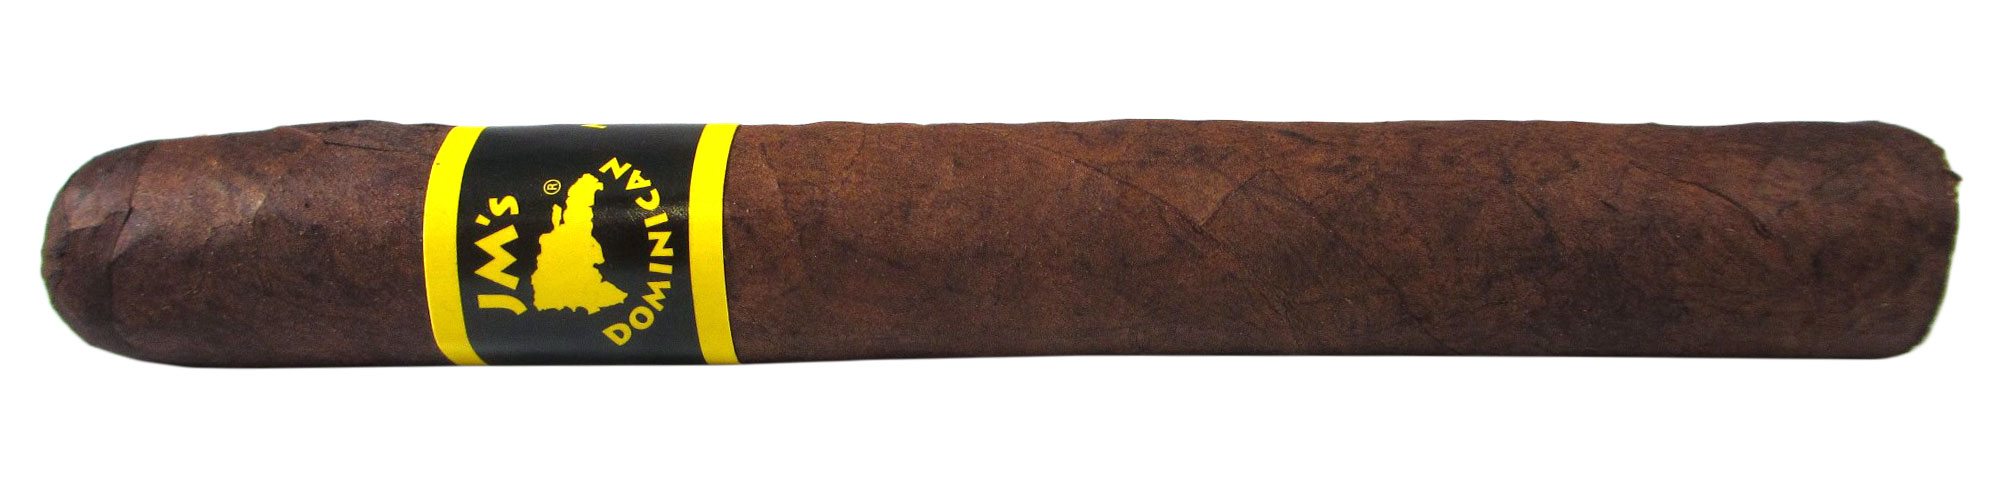 Blind Cigar Review: JM's Dominican Maduro Toro